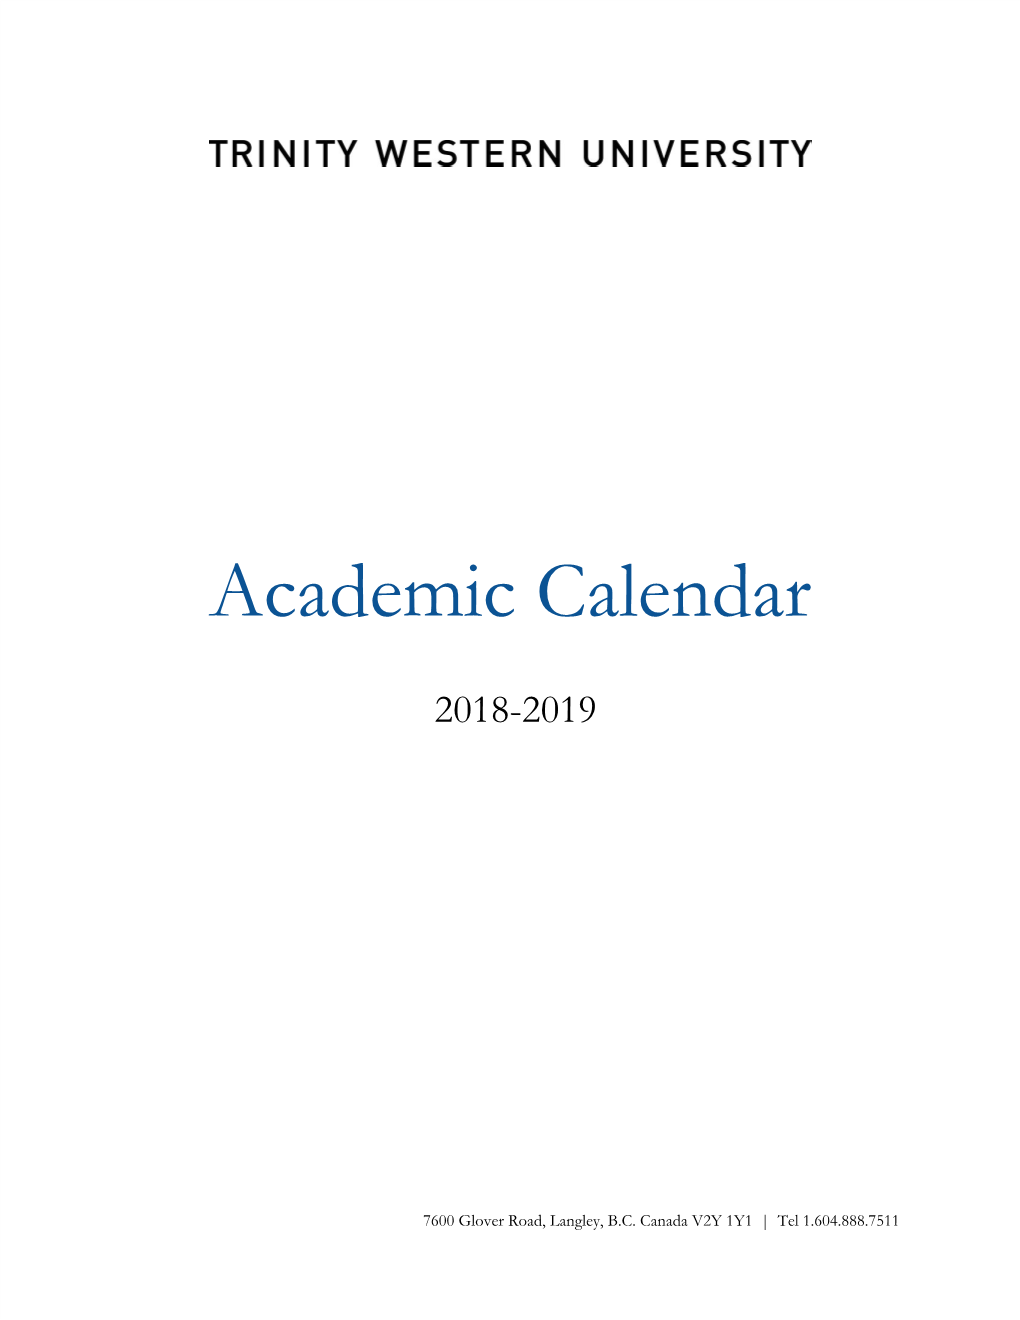 Academic Calendar 2018-2019 2 ​ ​ ​ ​